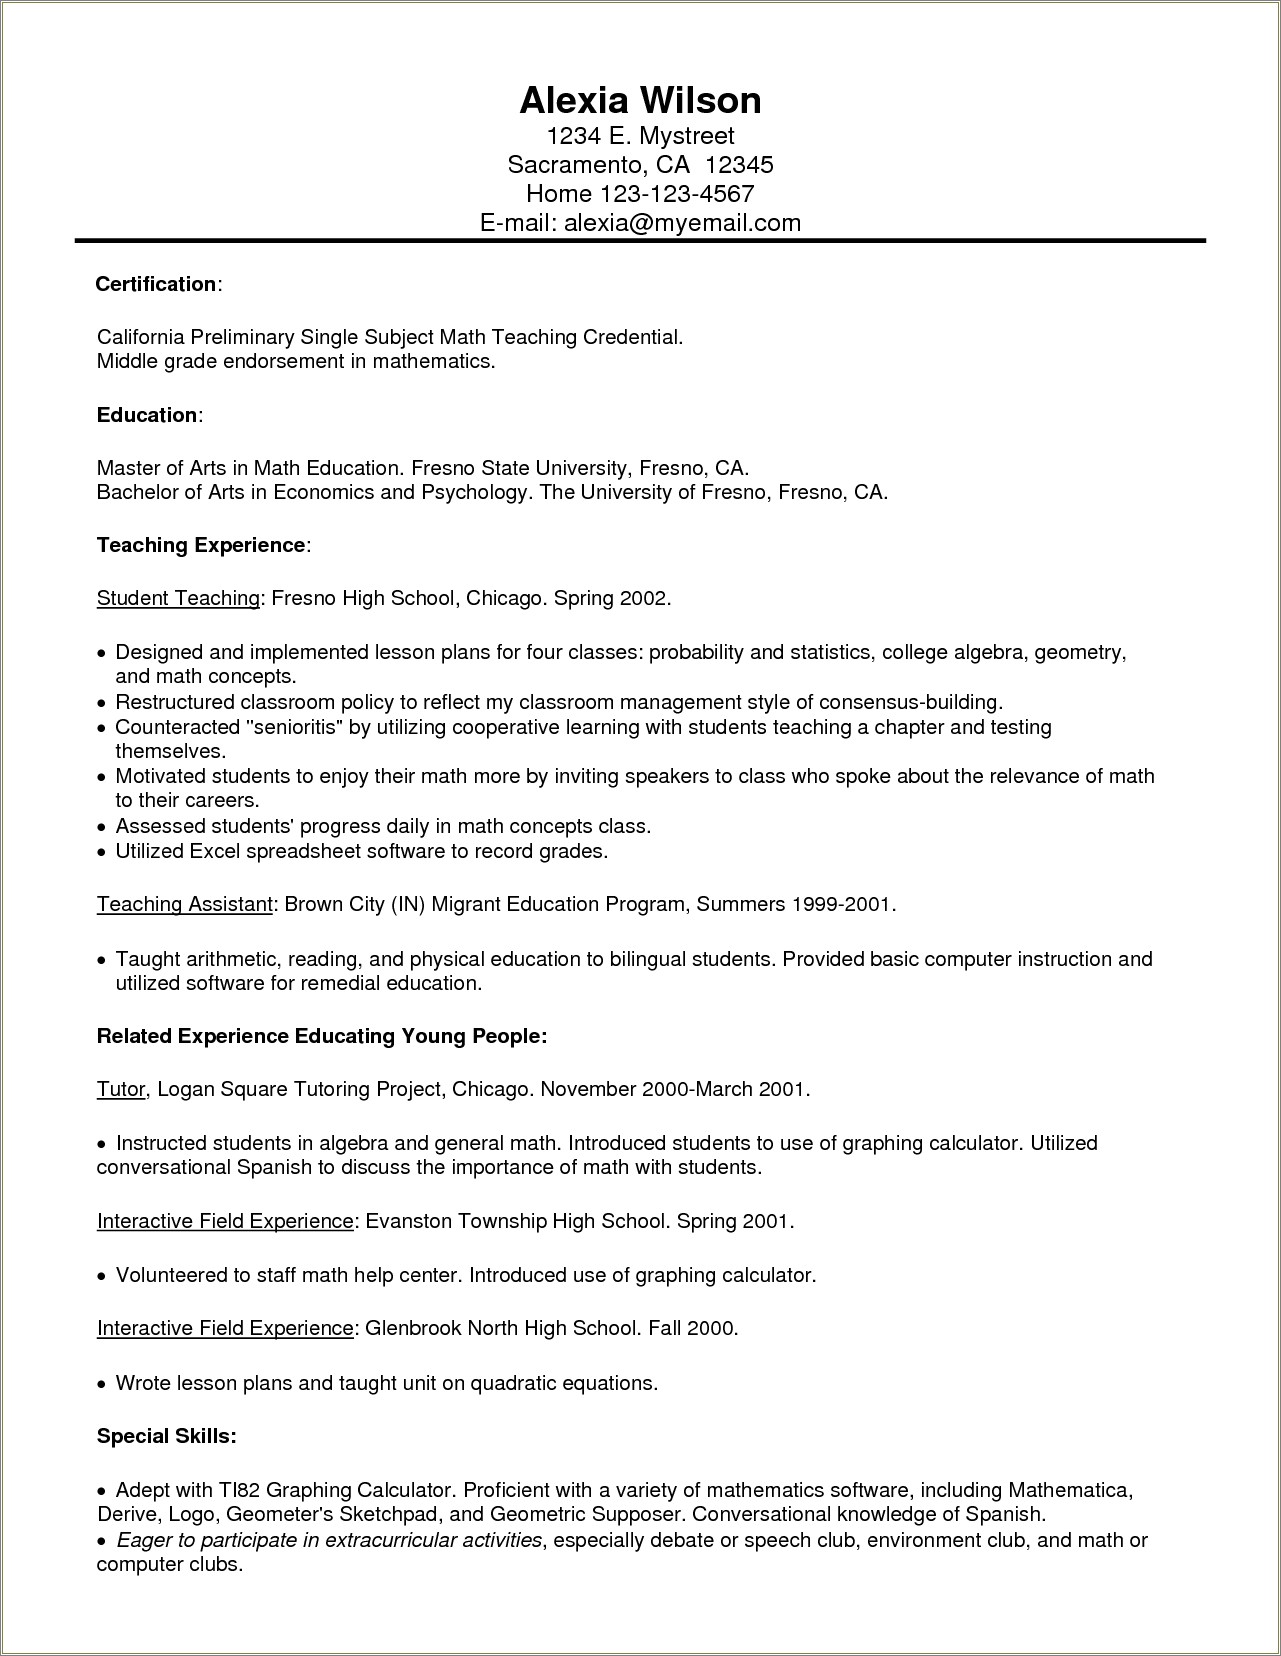 Resume Objective For Middle School Math Teacher